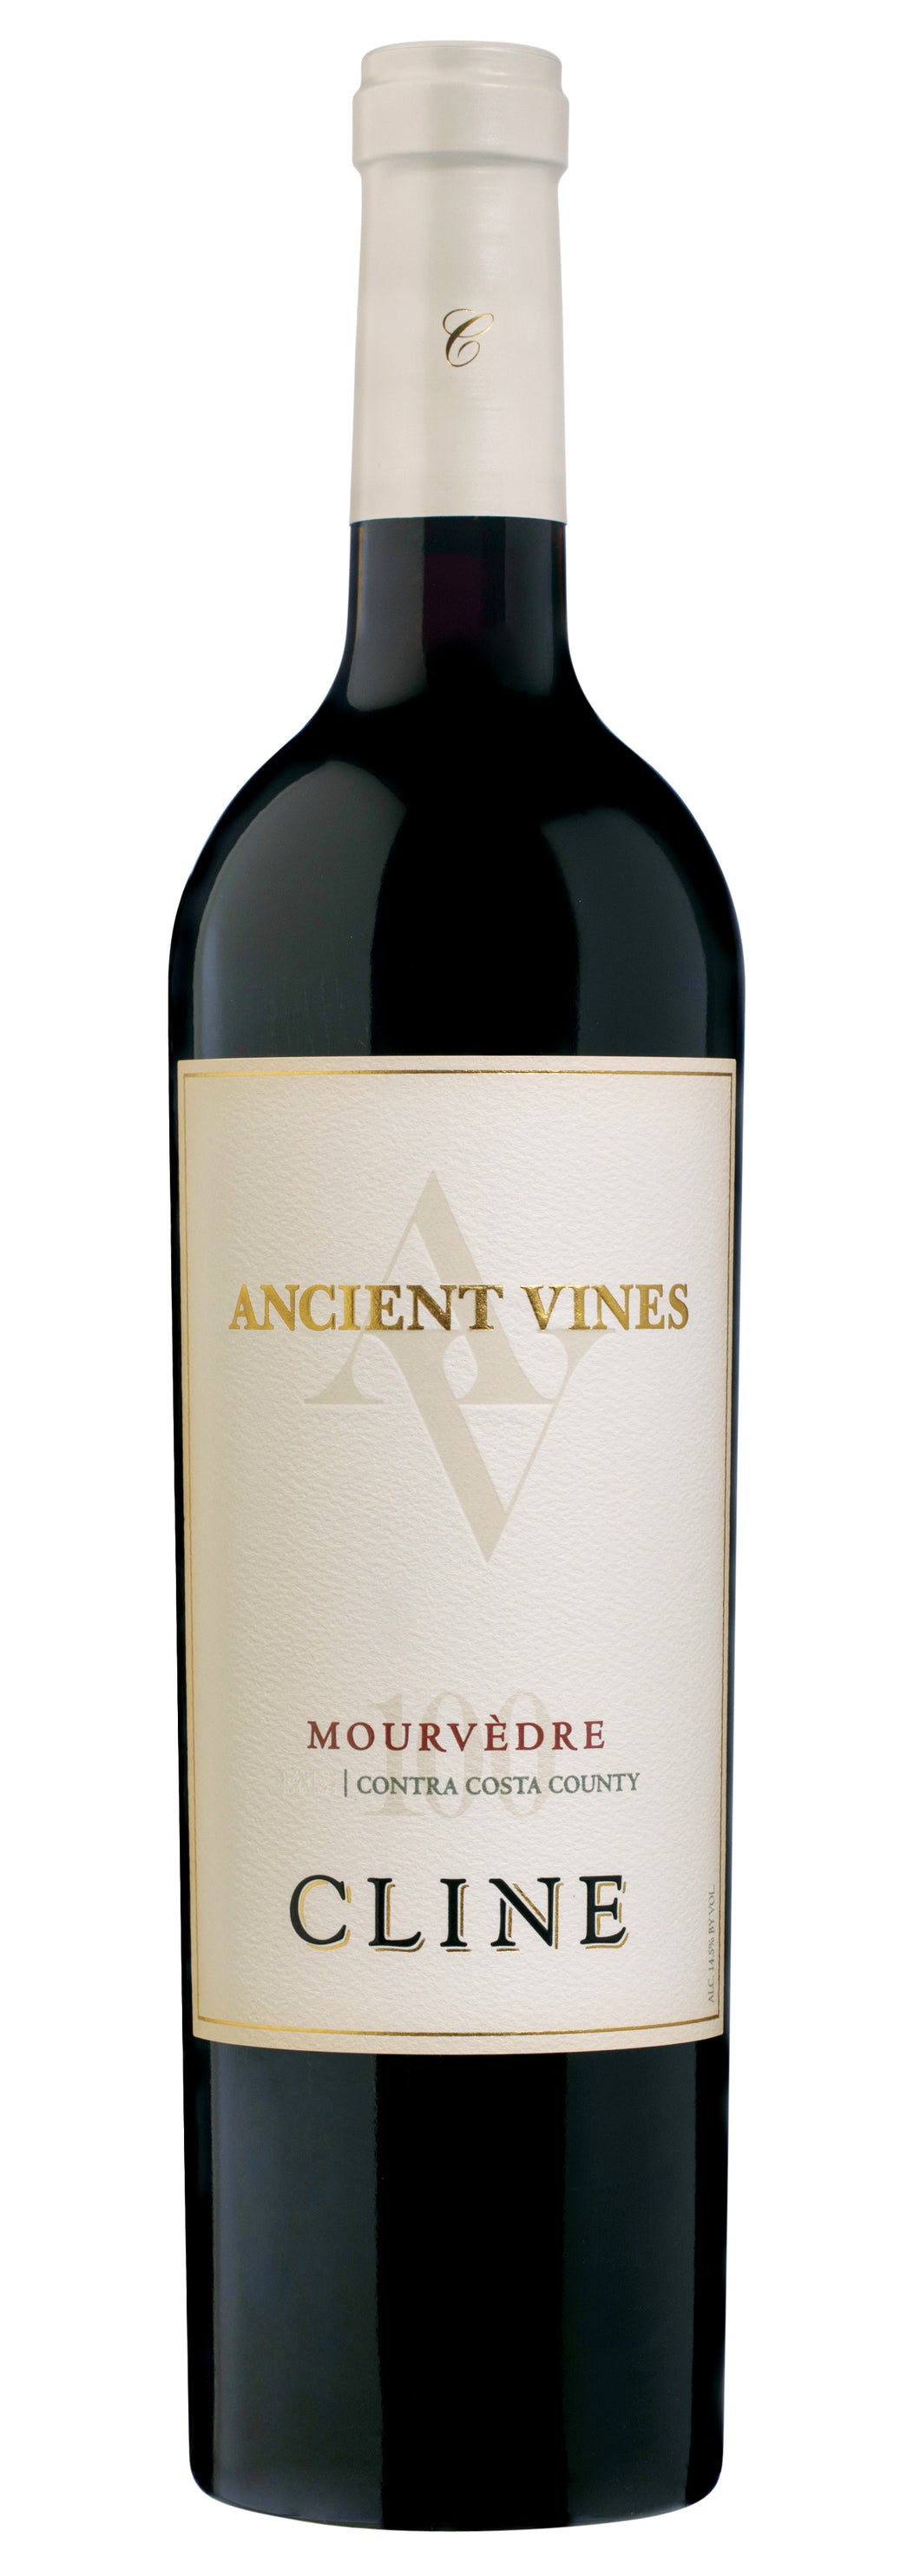 CLINE MOURVEDRE ANCIENT VINES - Vino Wines